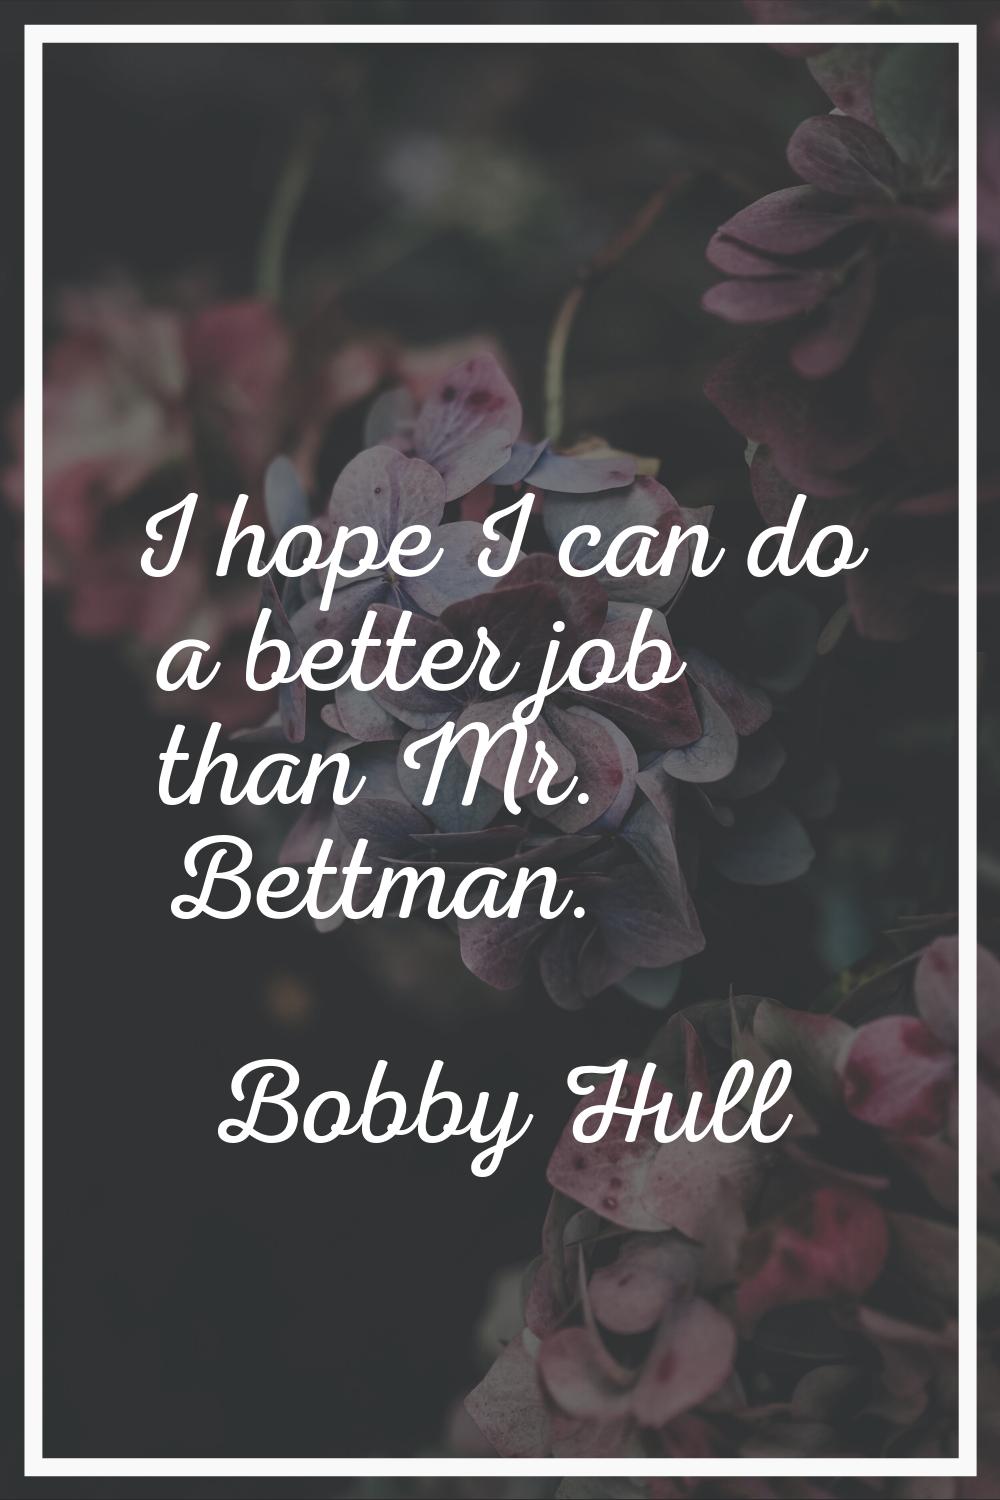 I hope I can do a better job than Mr. Bettman.